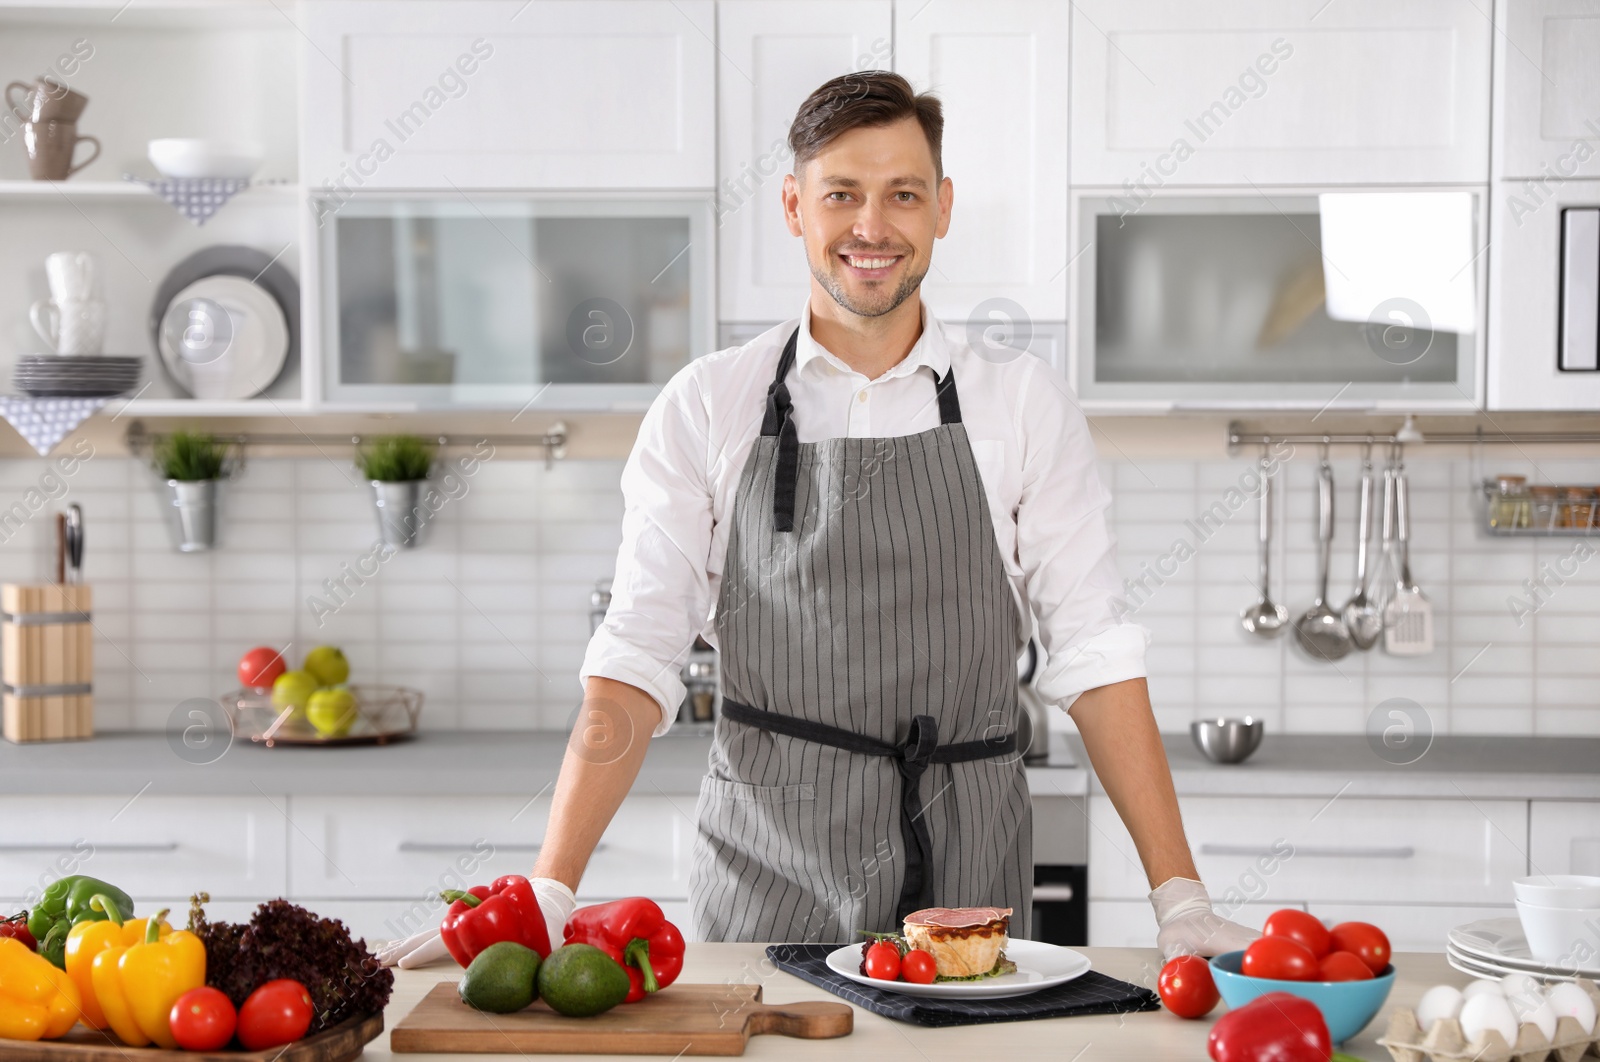 Photo of Professional chef in uniform at restaurant kitchen